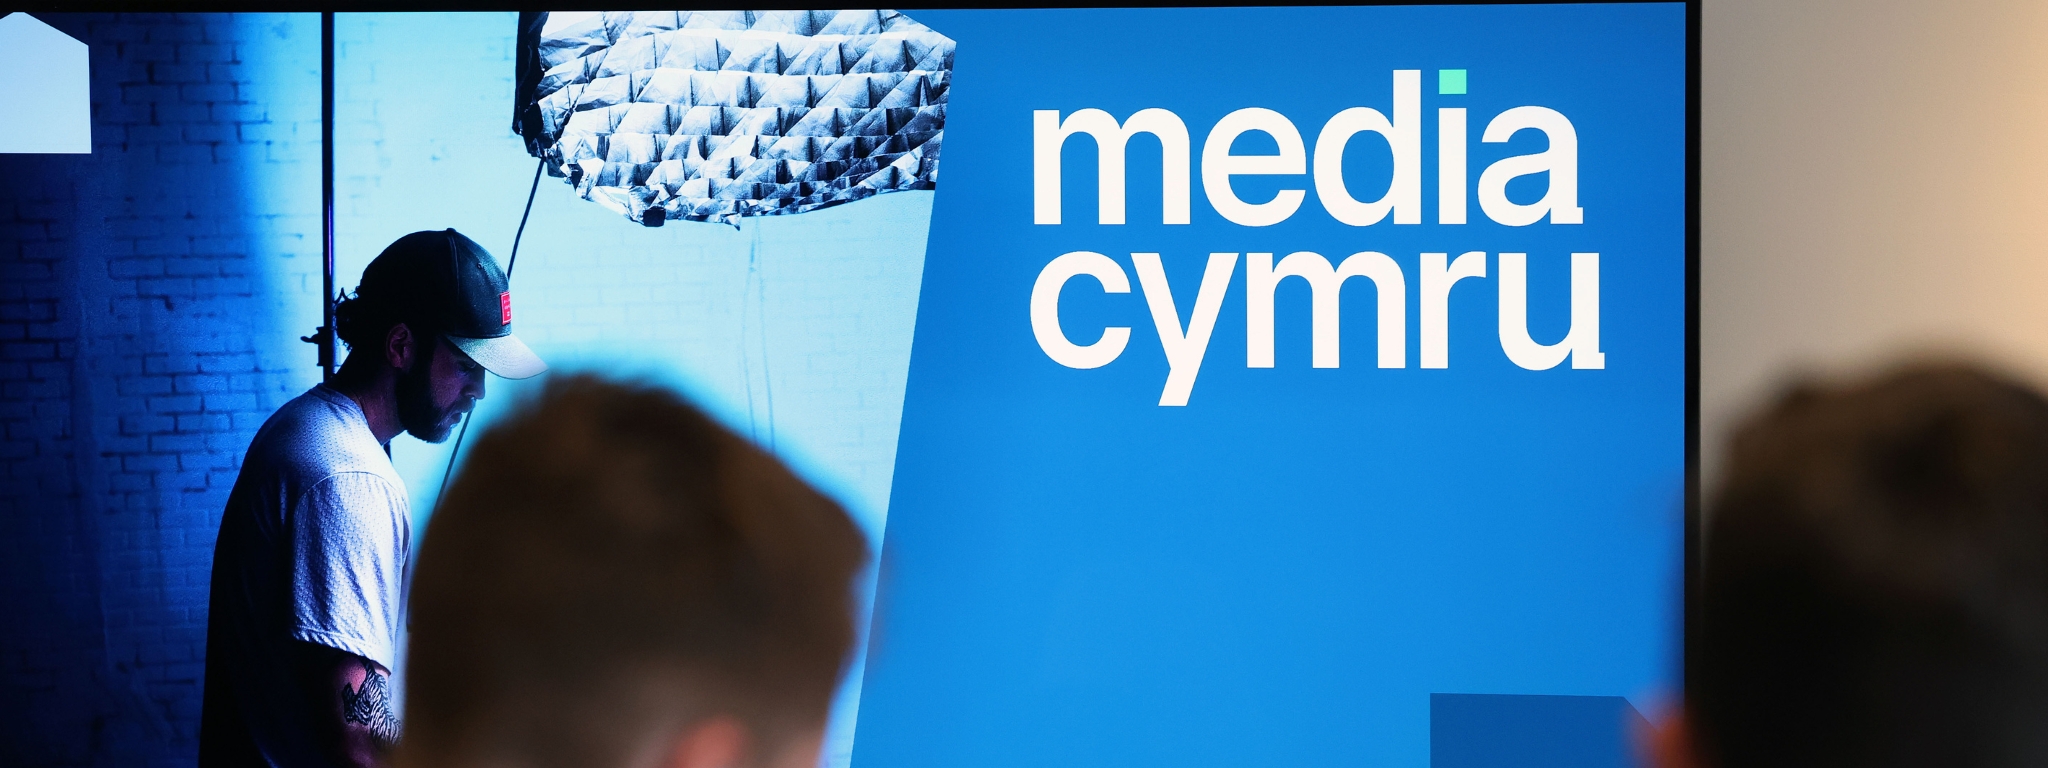 Picture of a TV screen with Media Cymru logo